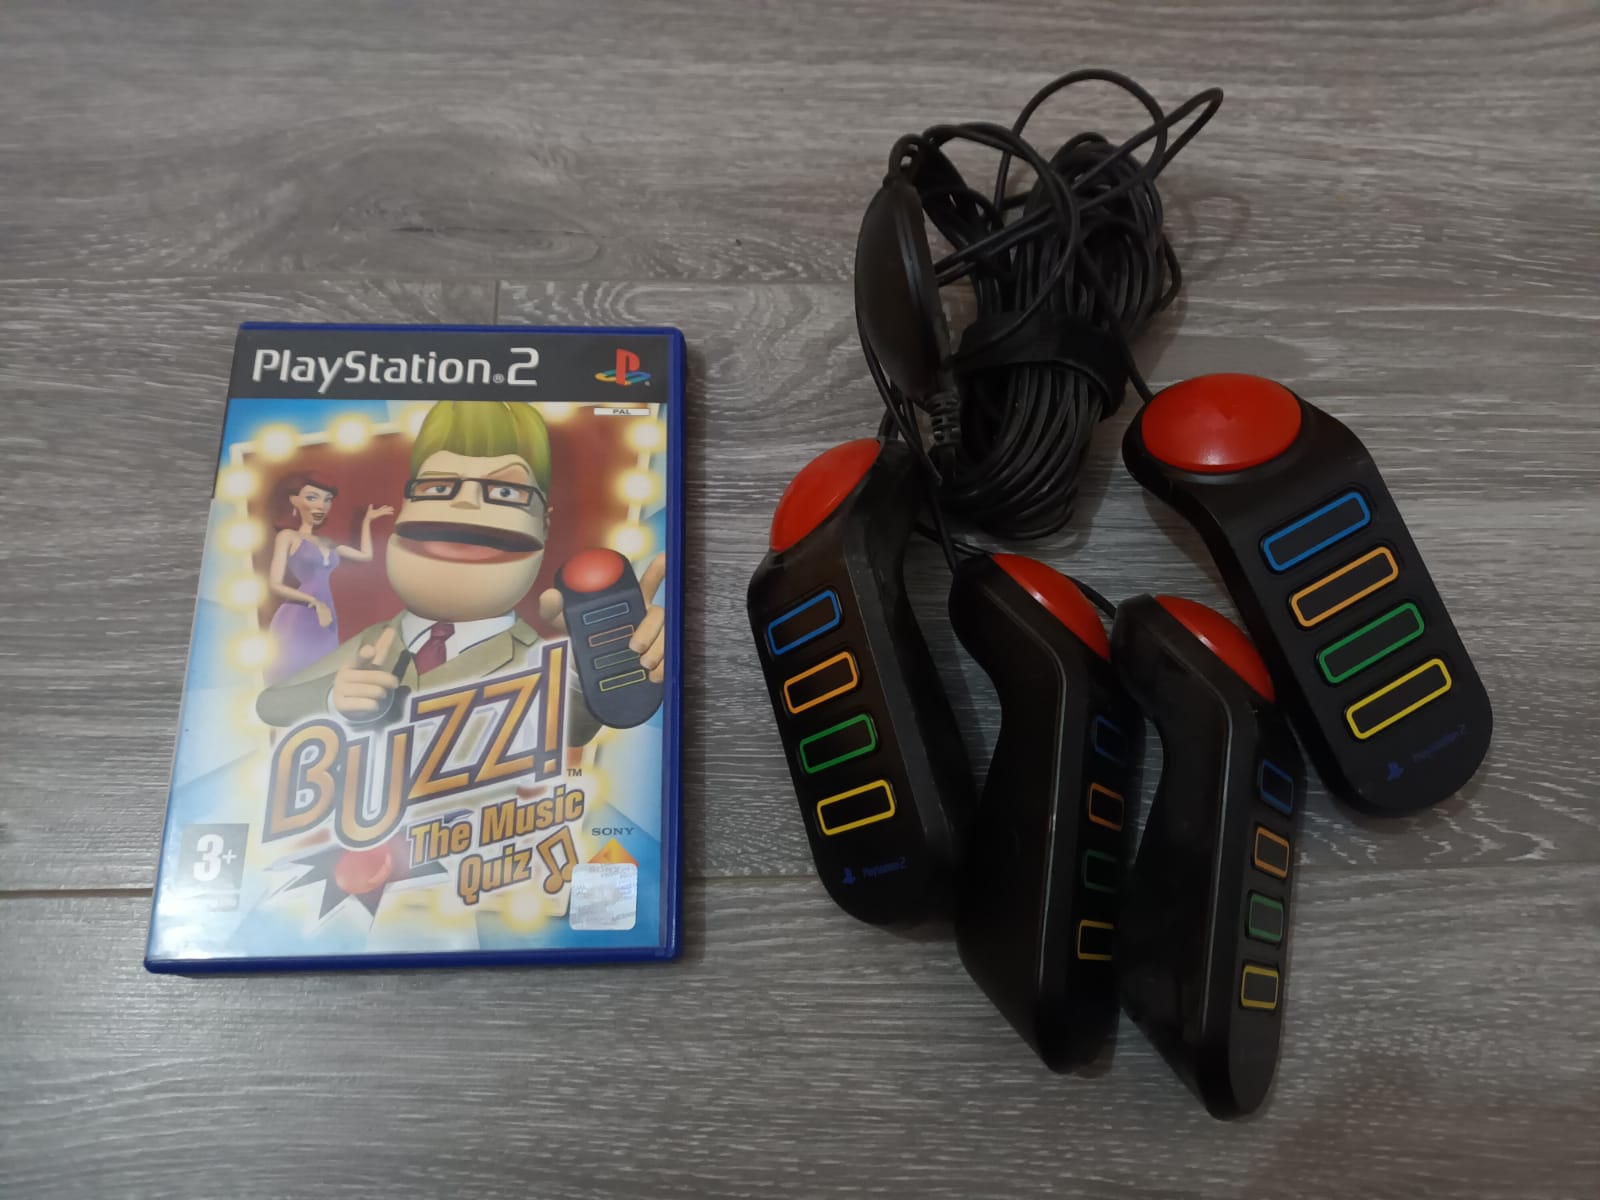 Set 4 Buzz Controller + Buzz The Music Quiz - PlayStation PS2